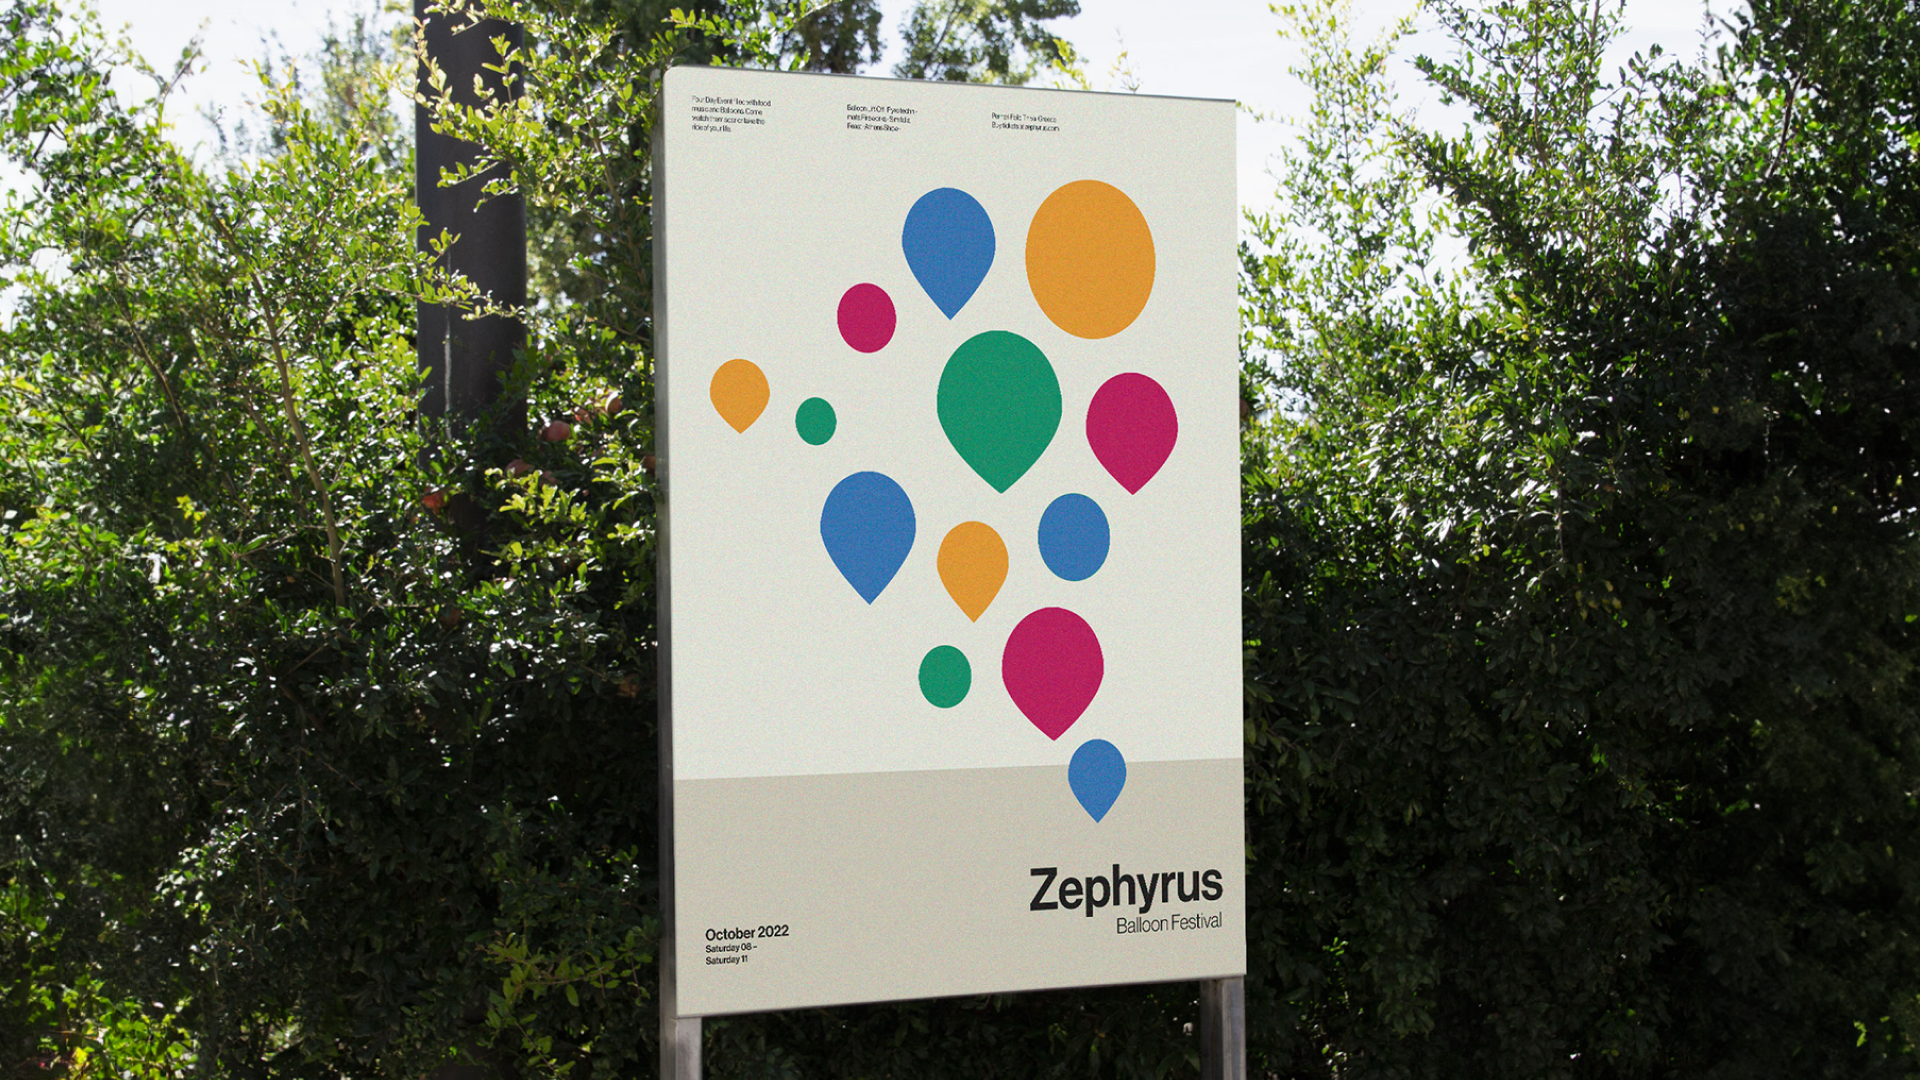 Zephyrus Balloon Festival